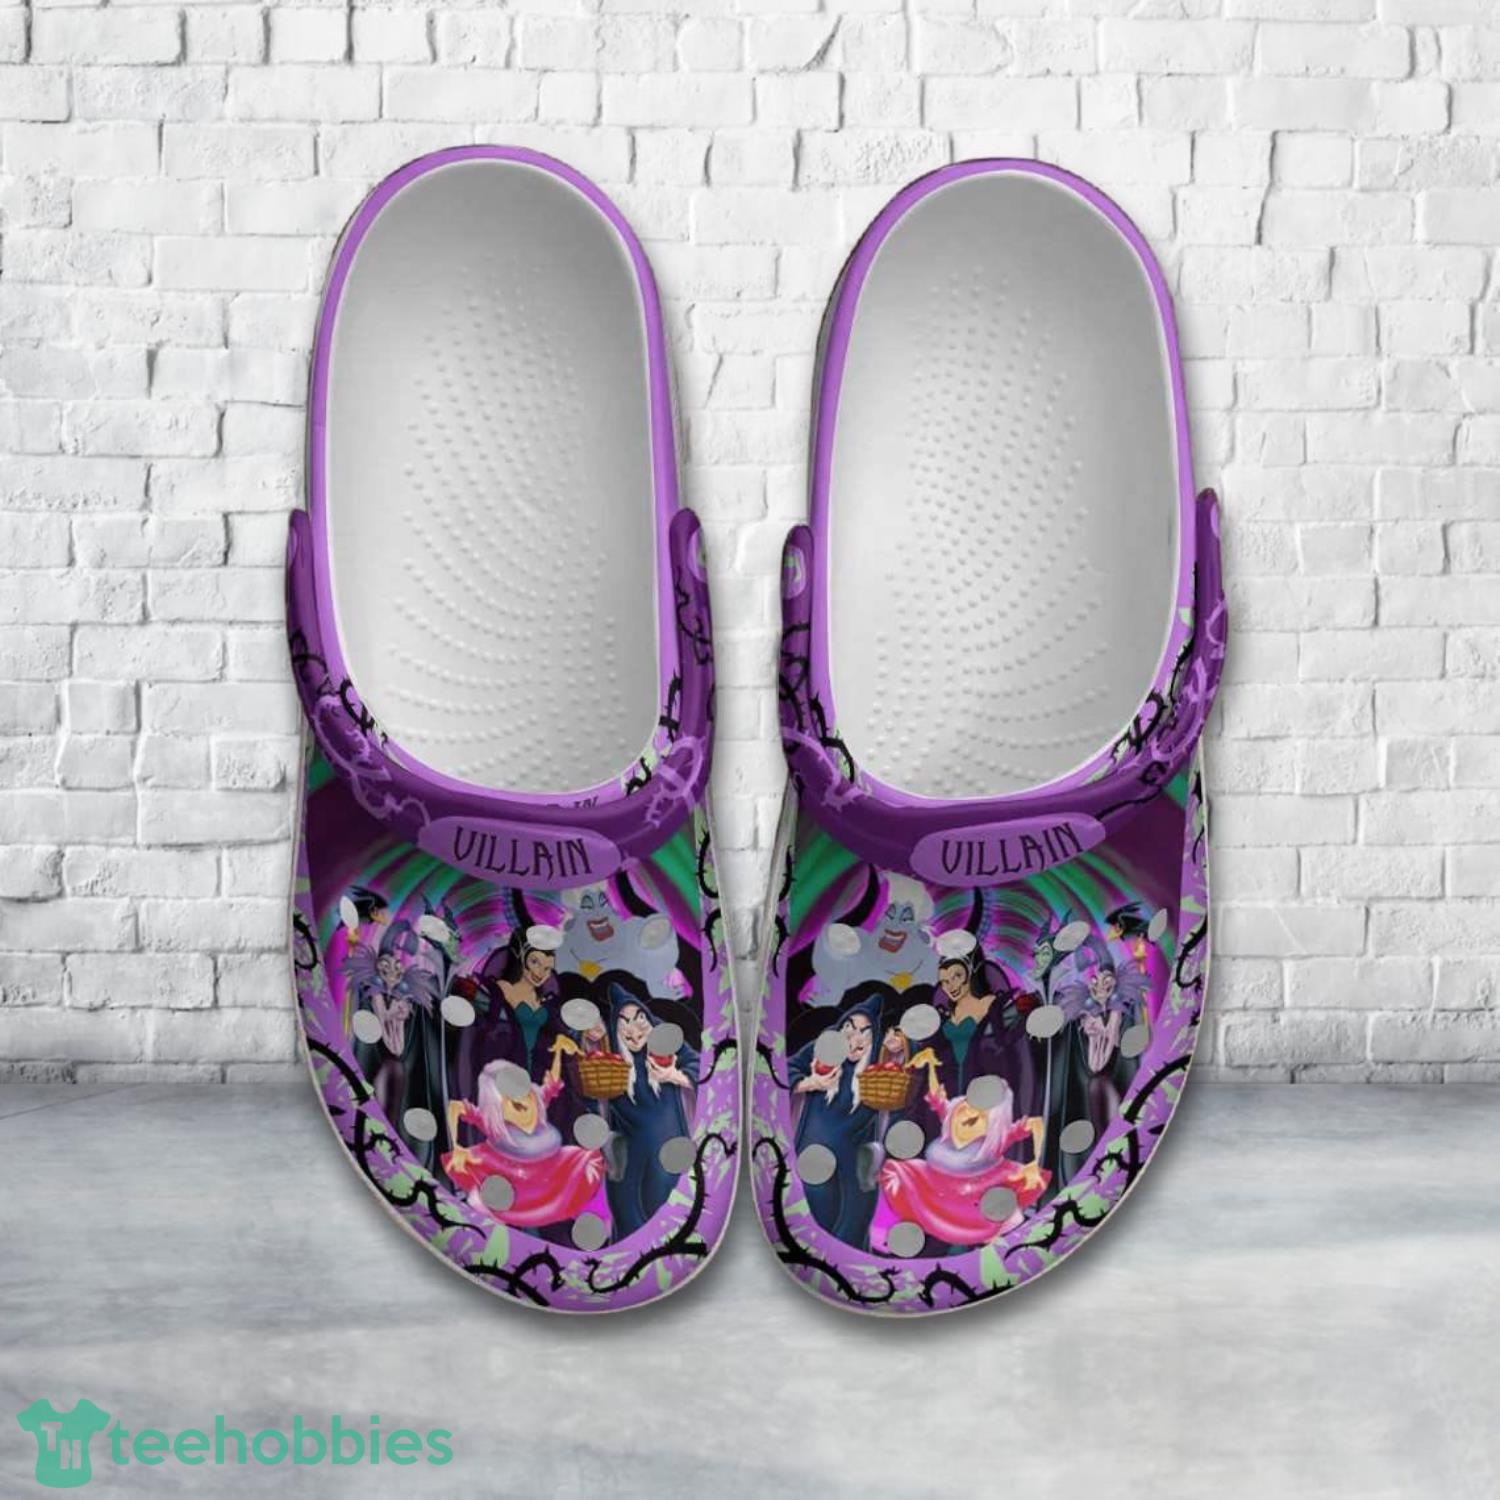 Villians Disney Full Print Green Purple Disney Clog Shoes Product Photo 1